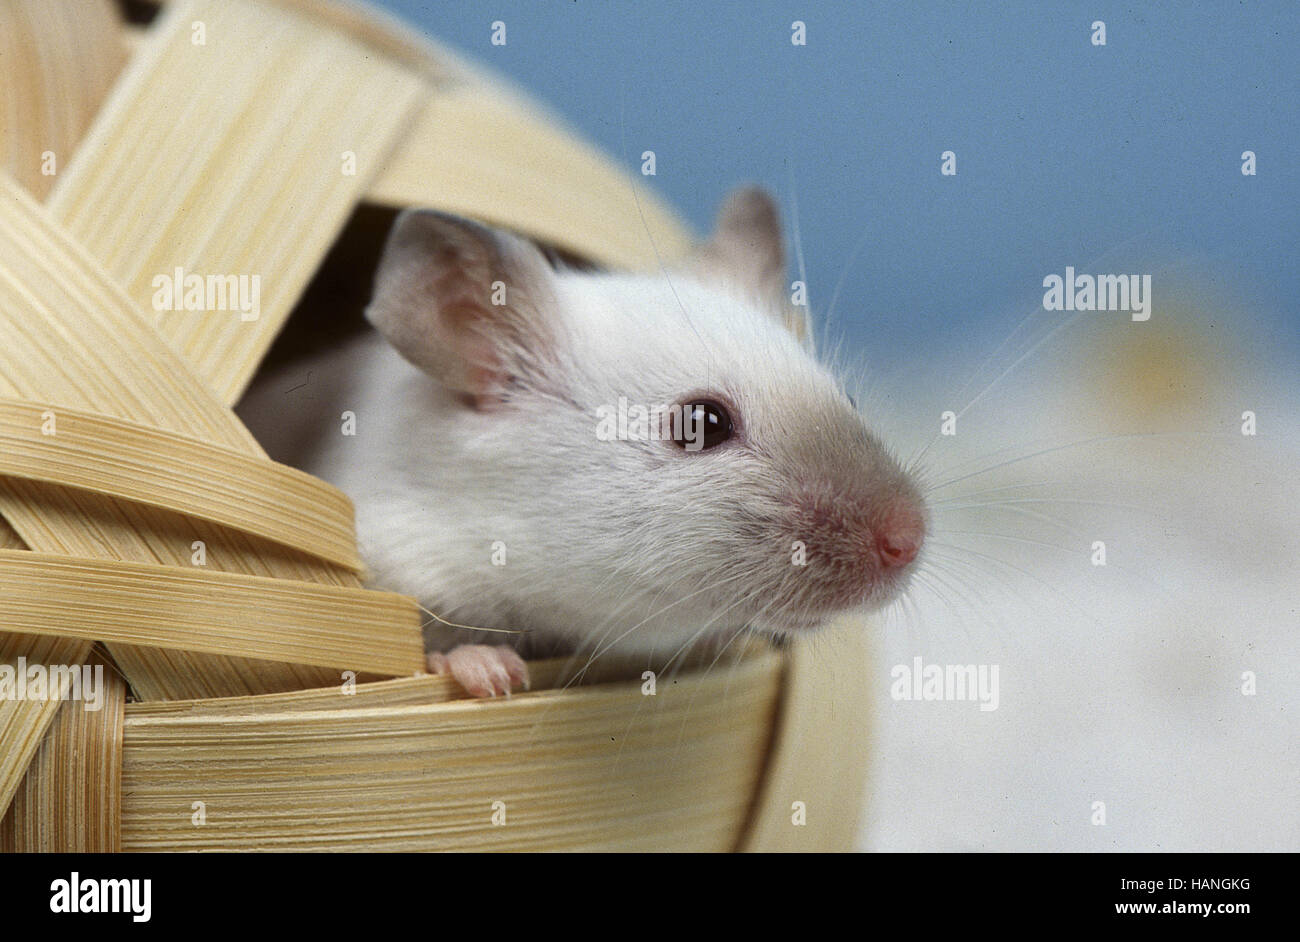 Ratones blancos / Weisse Maus / Farbmaus Foto de stock